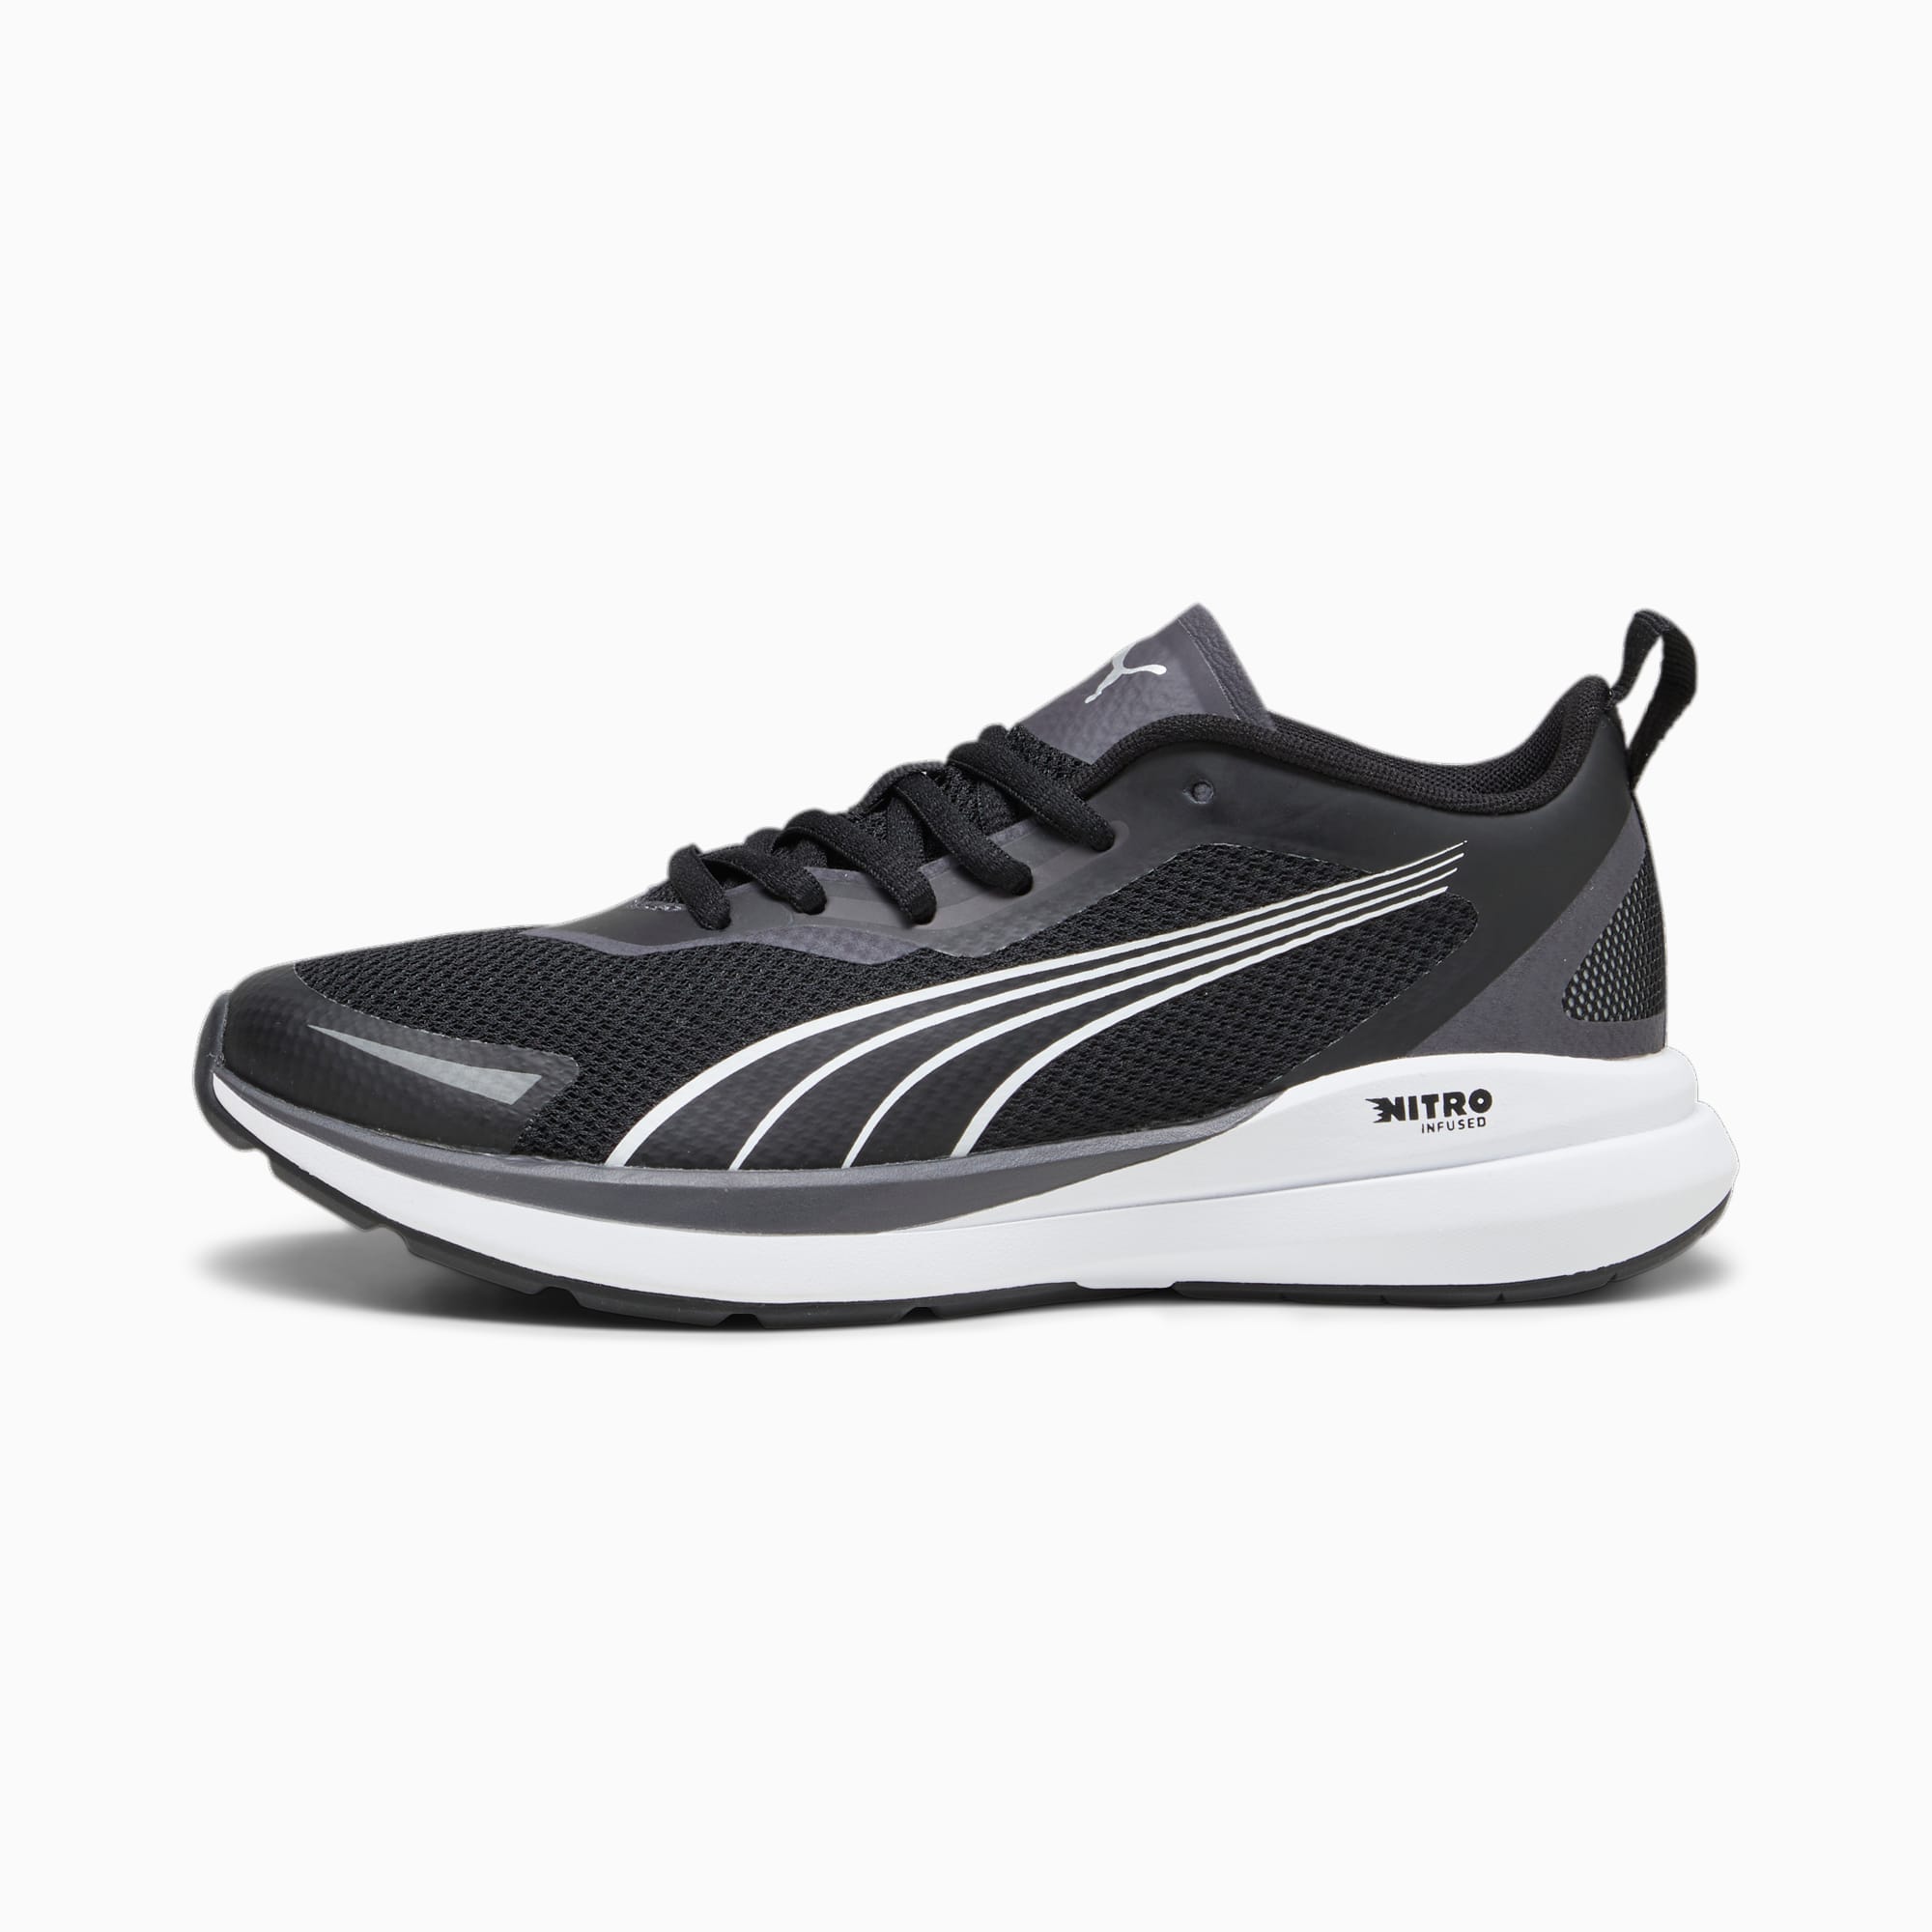 PUMA Kruz NITRO™ Sneakers Teenager Schuhe, Schwarz/Weiß/Silber, Größe: 35.5, Schuhe